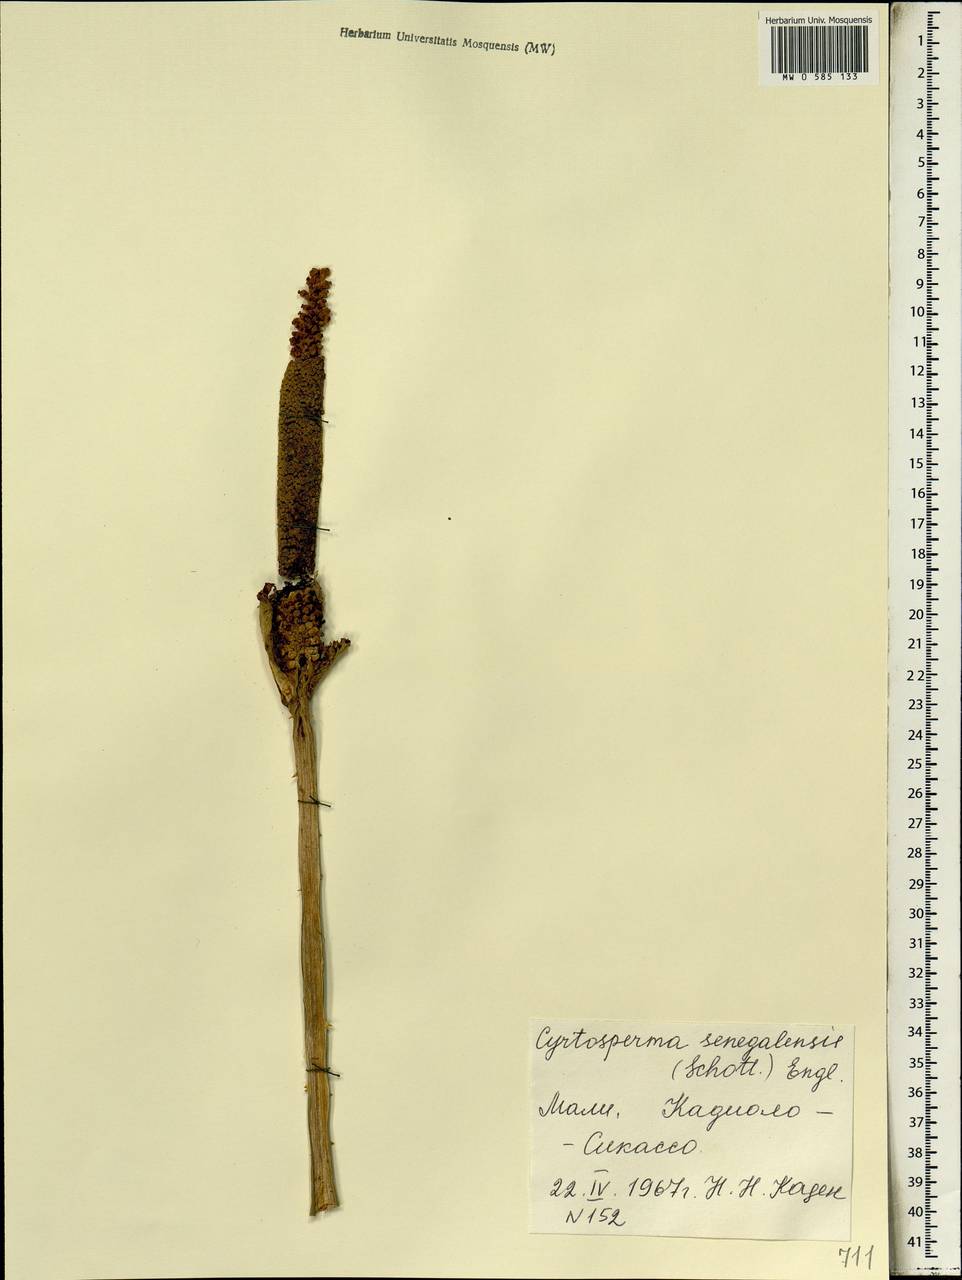 Lasimorpha senegalensis Schott, Африка (AFR) (Мали)